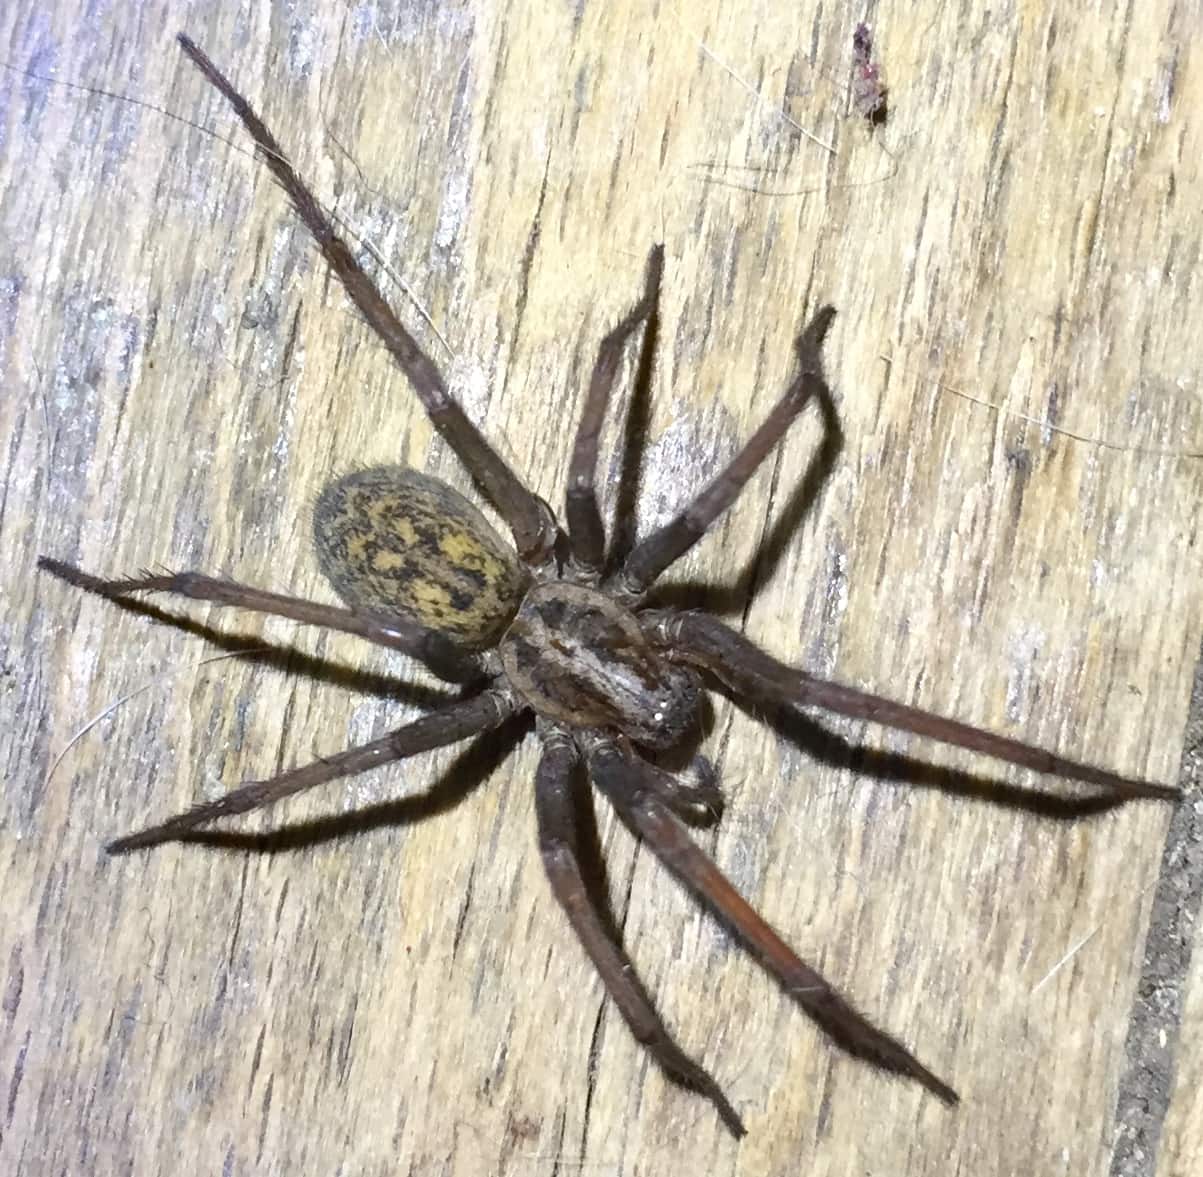 Picture of Eratigena atrica (Giant House Spider) - Female - Dorsal